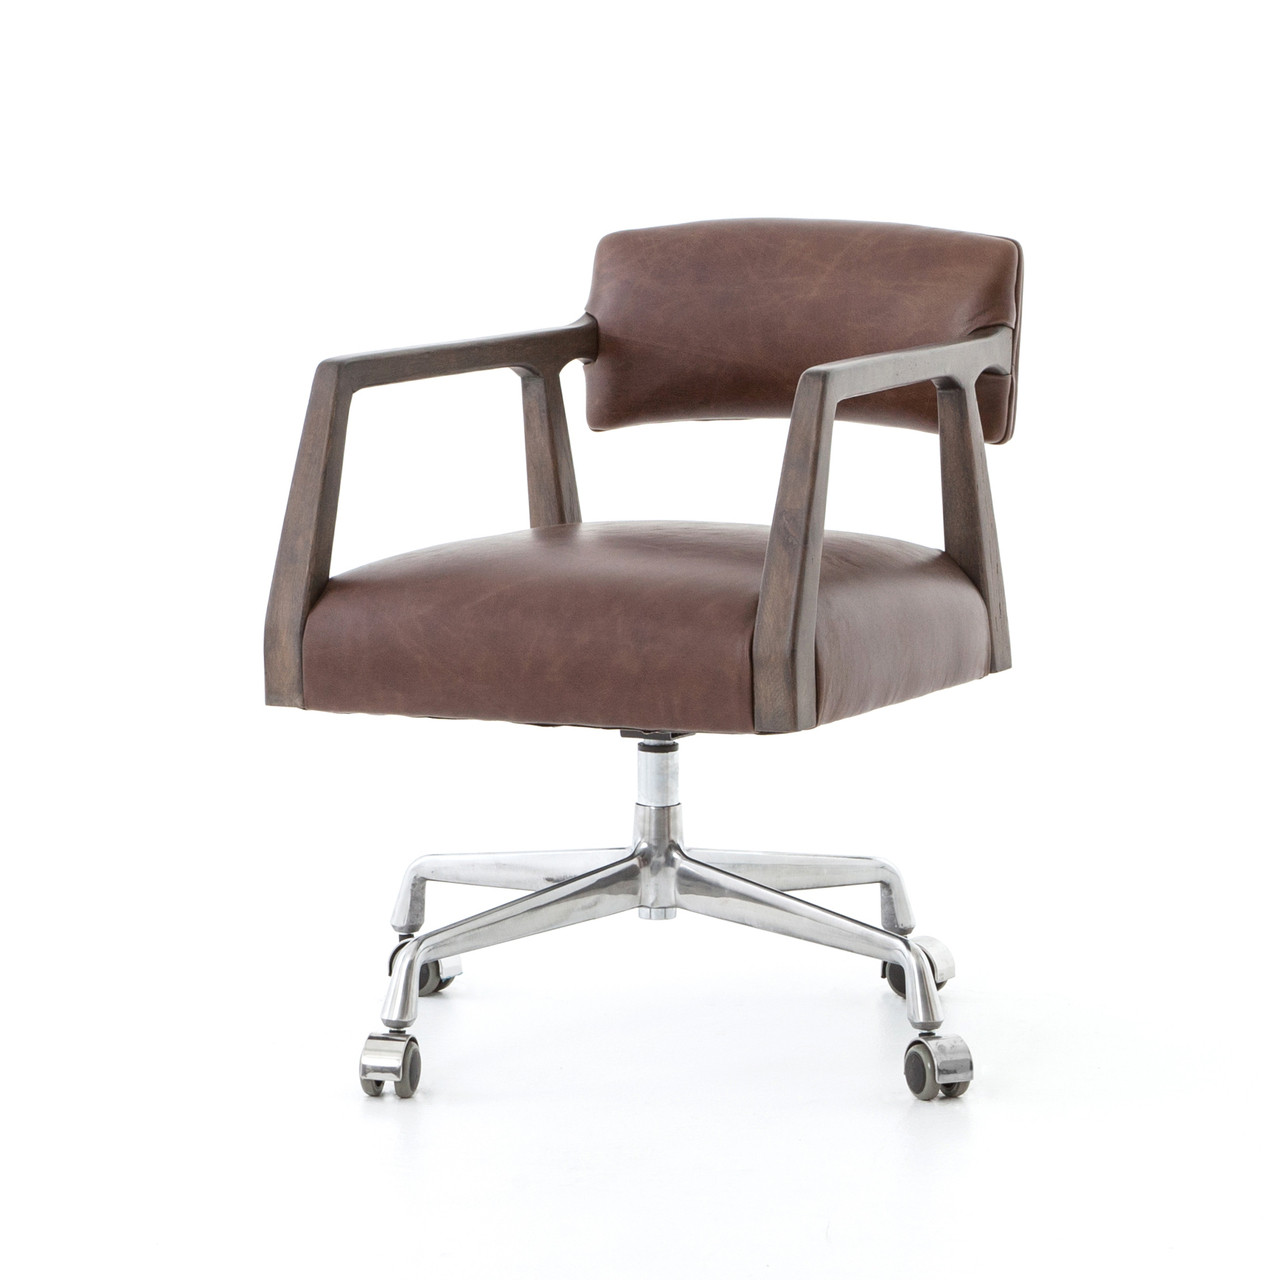 Tyler MidCentury Modern Brown Leather Office Desk Chair